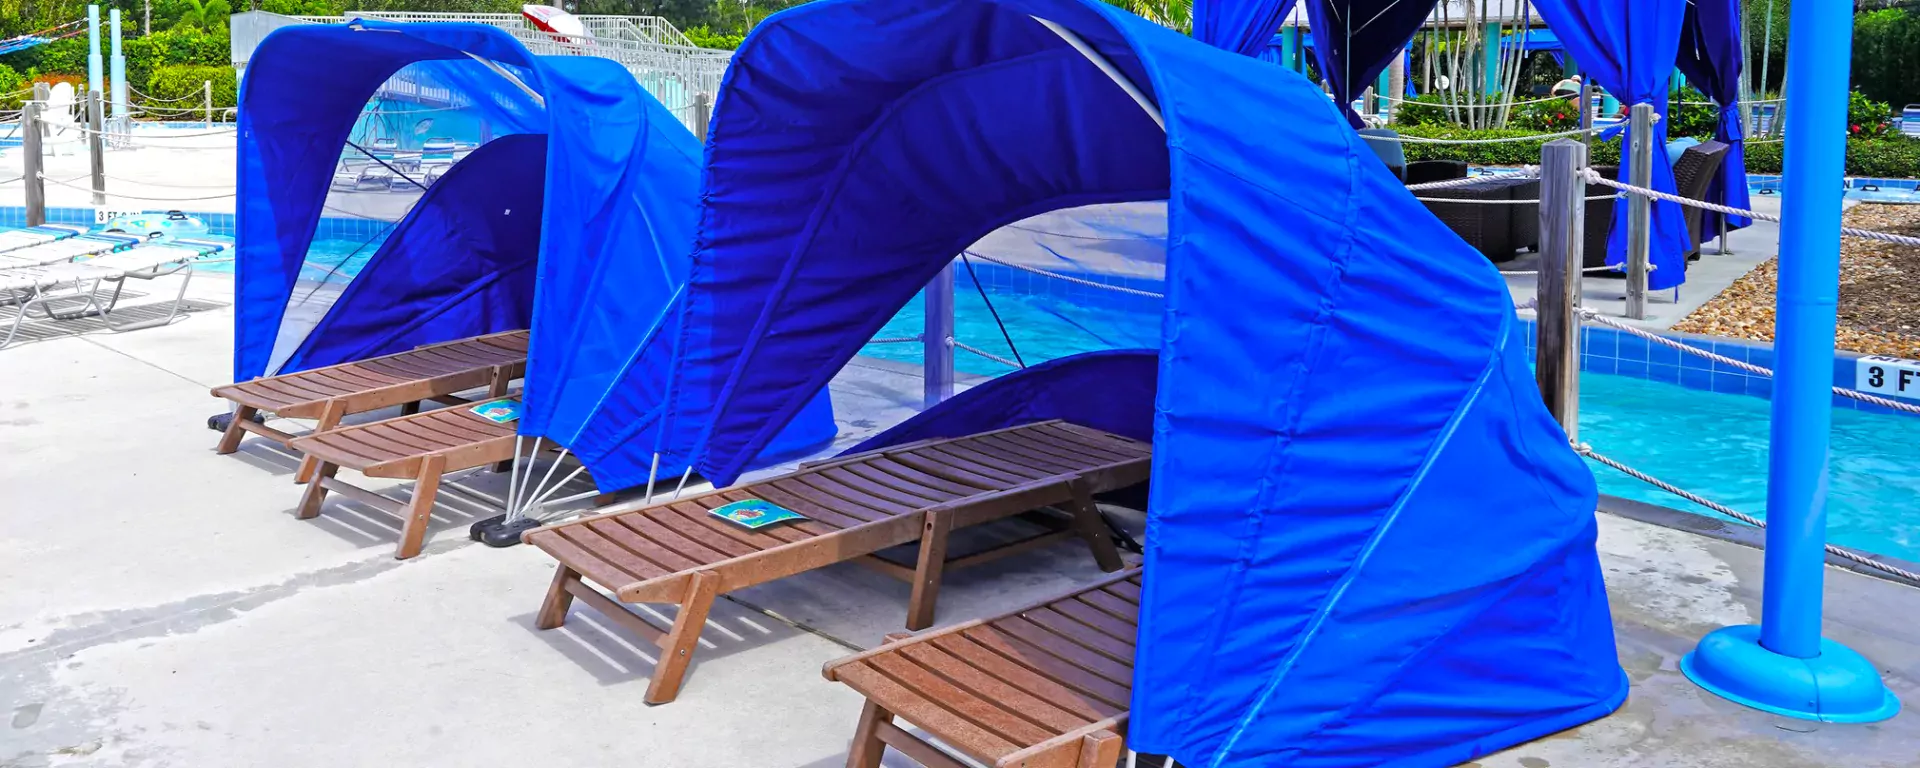 Image of cabanas and clamshells for rent at Sailfish Splash Waterpark in Stuart, FL.